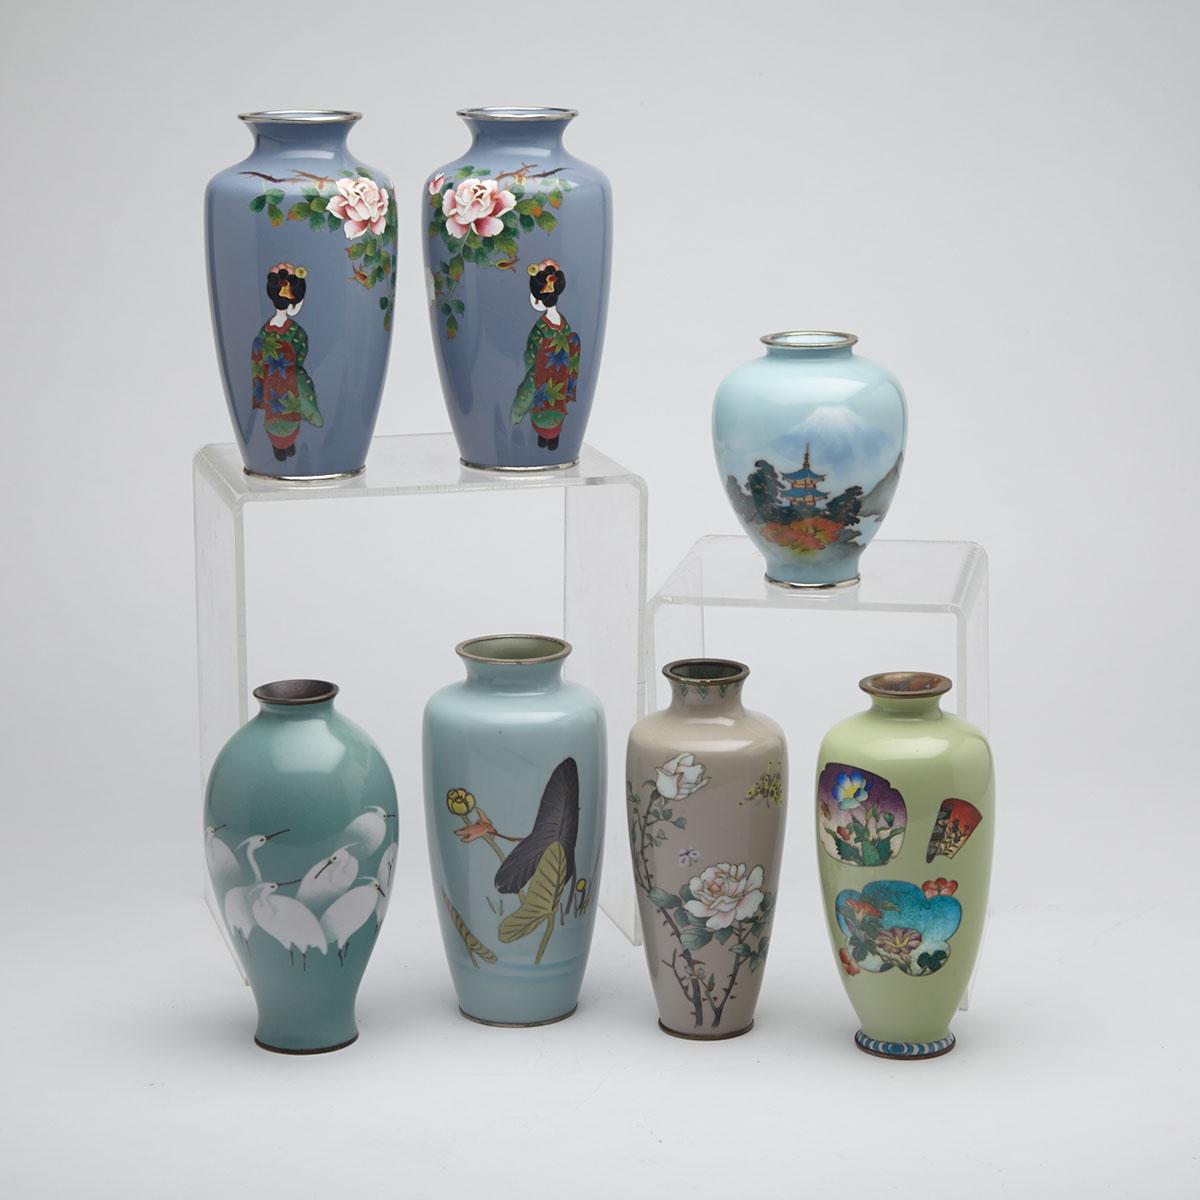 Group of Seven Cloisonné Enamel Vases, First-Half 20th Century